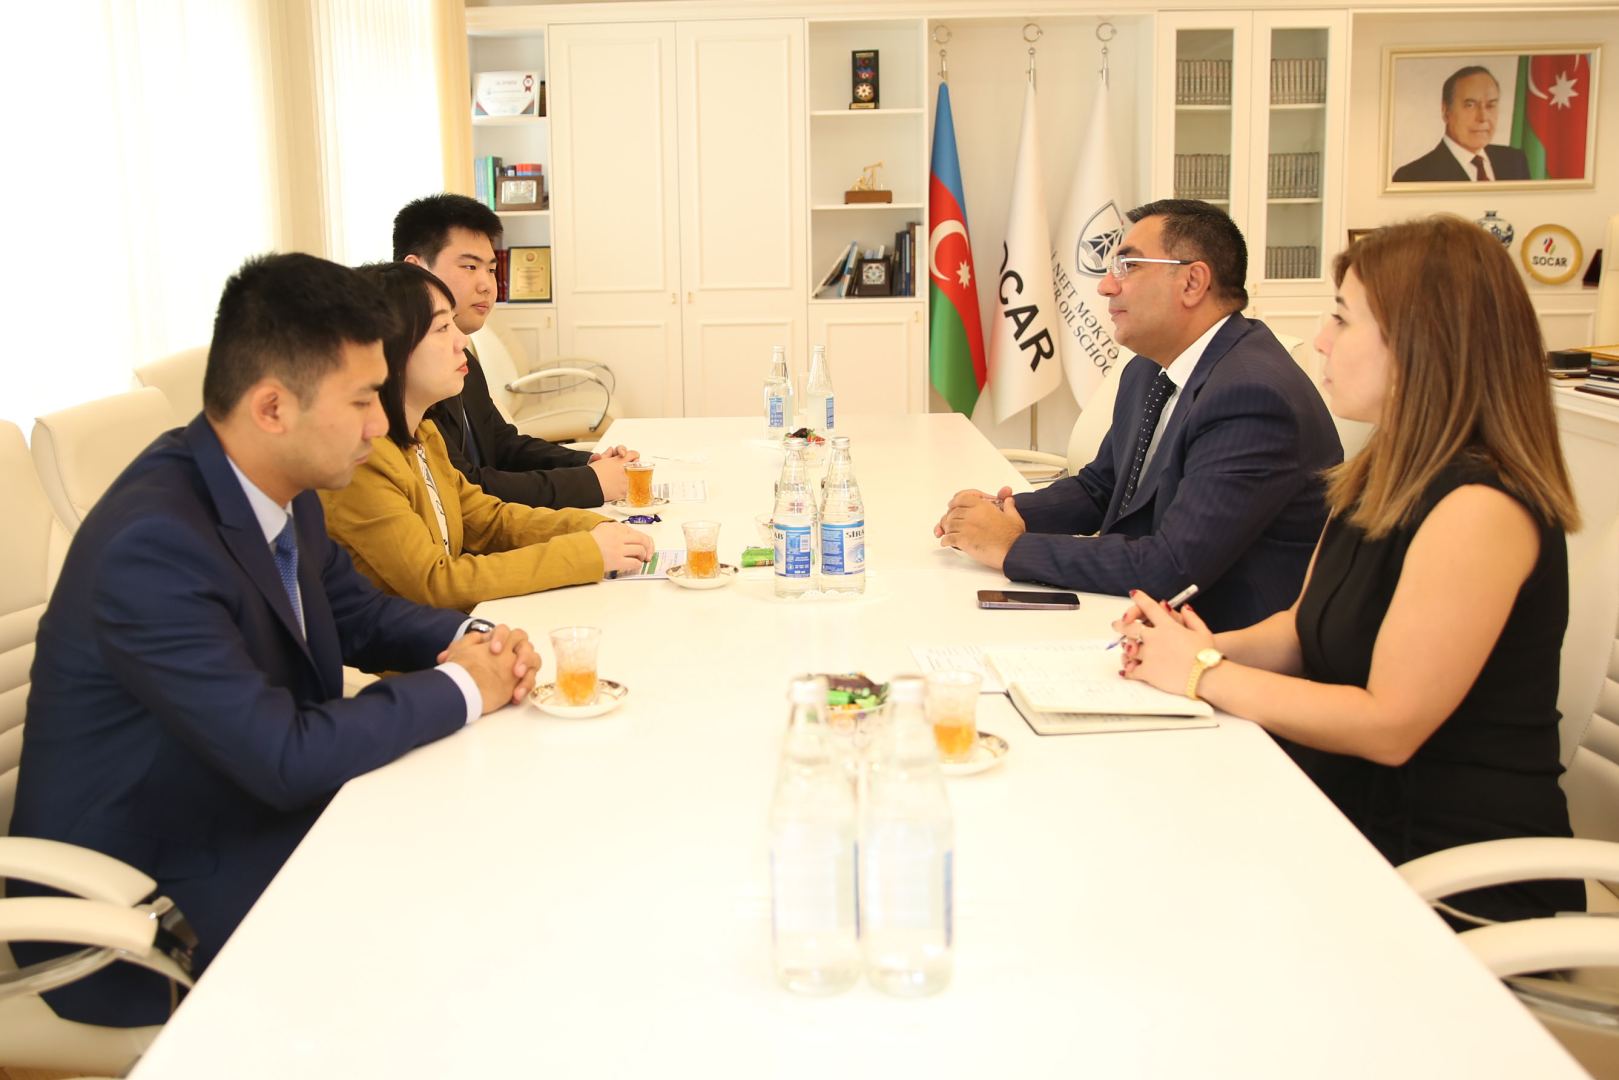 Baku Higher Oil School organizes international program for Chinese students (PHOTO)